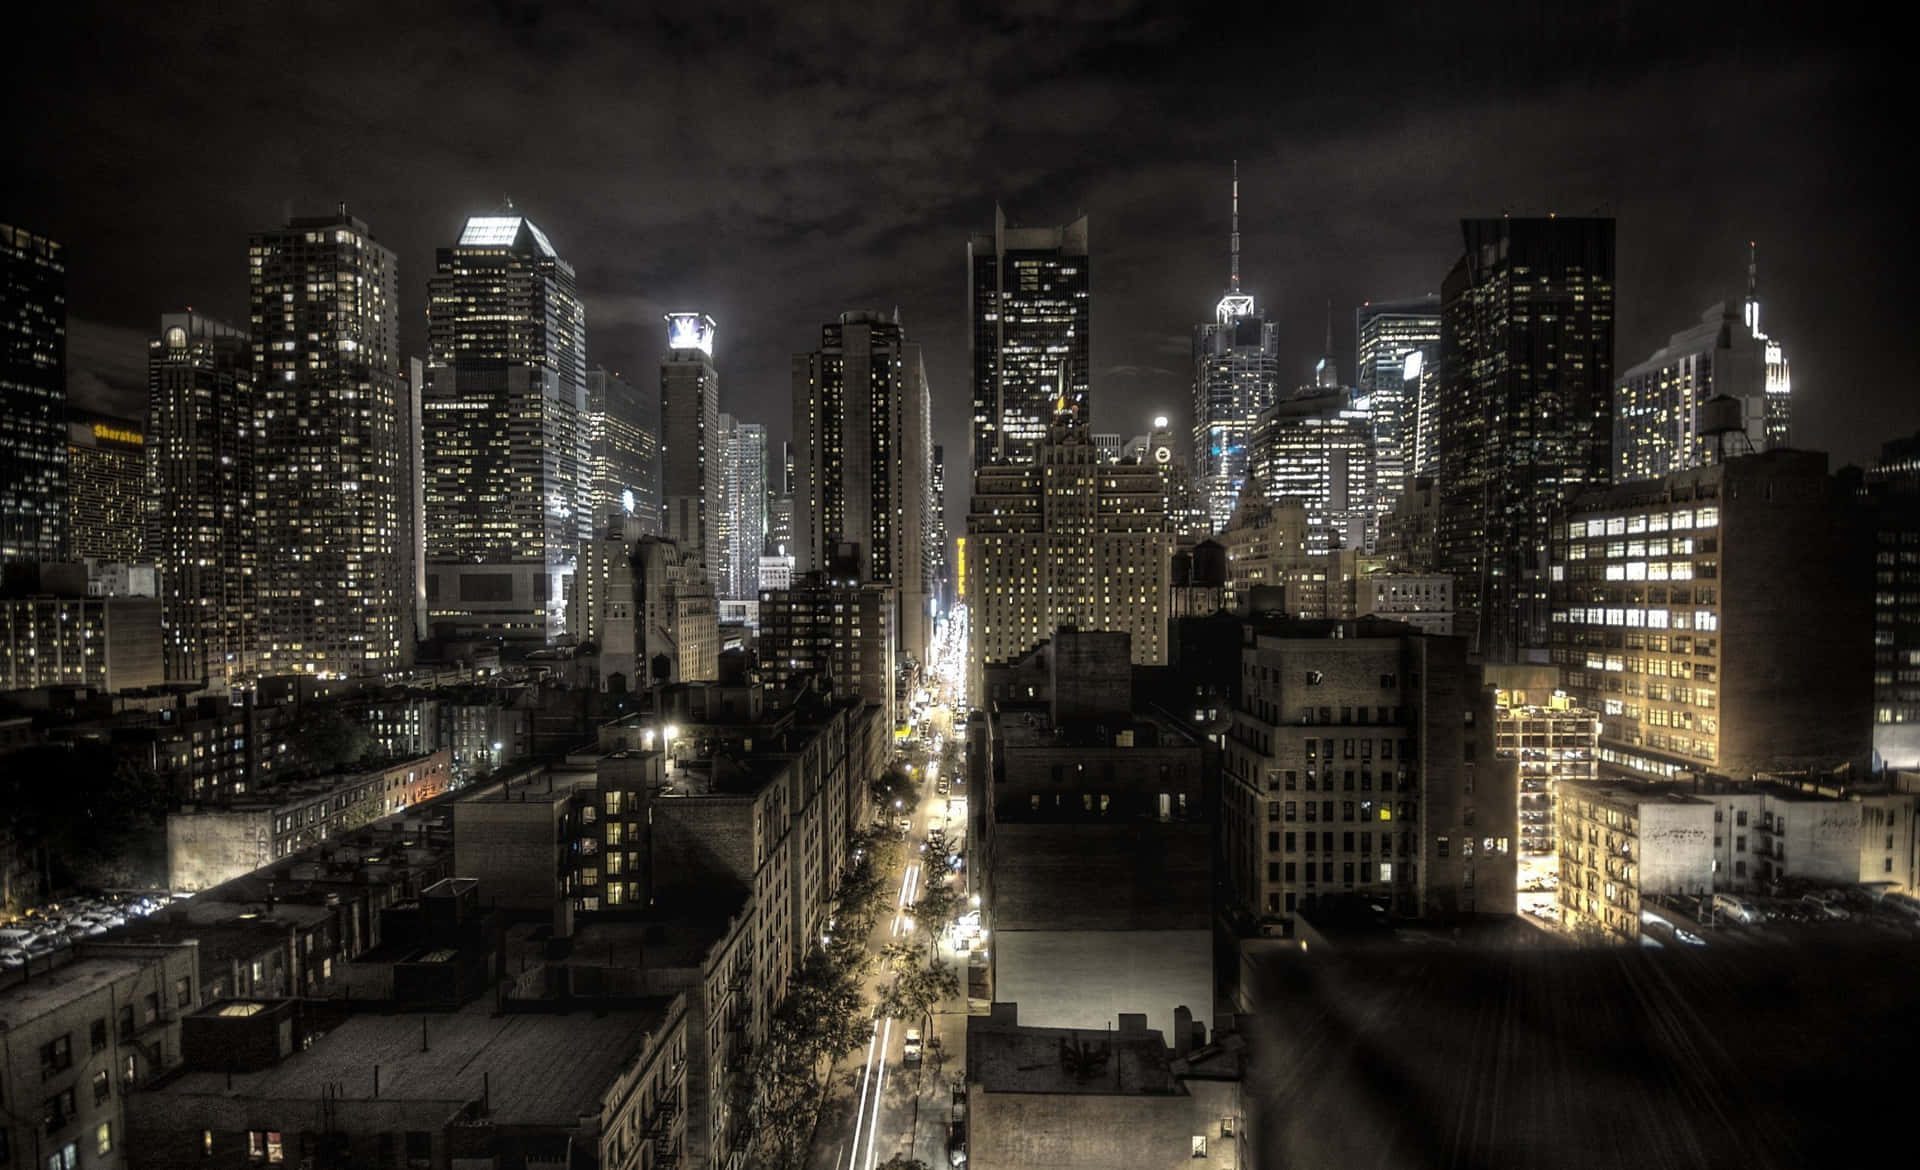 Hintergrundbildvon New York City